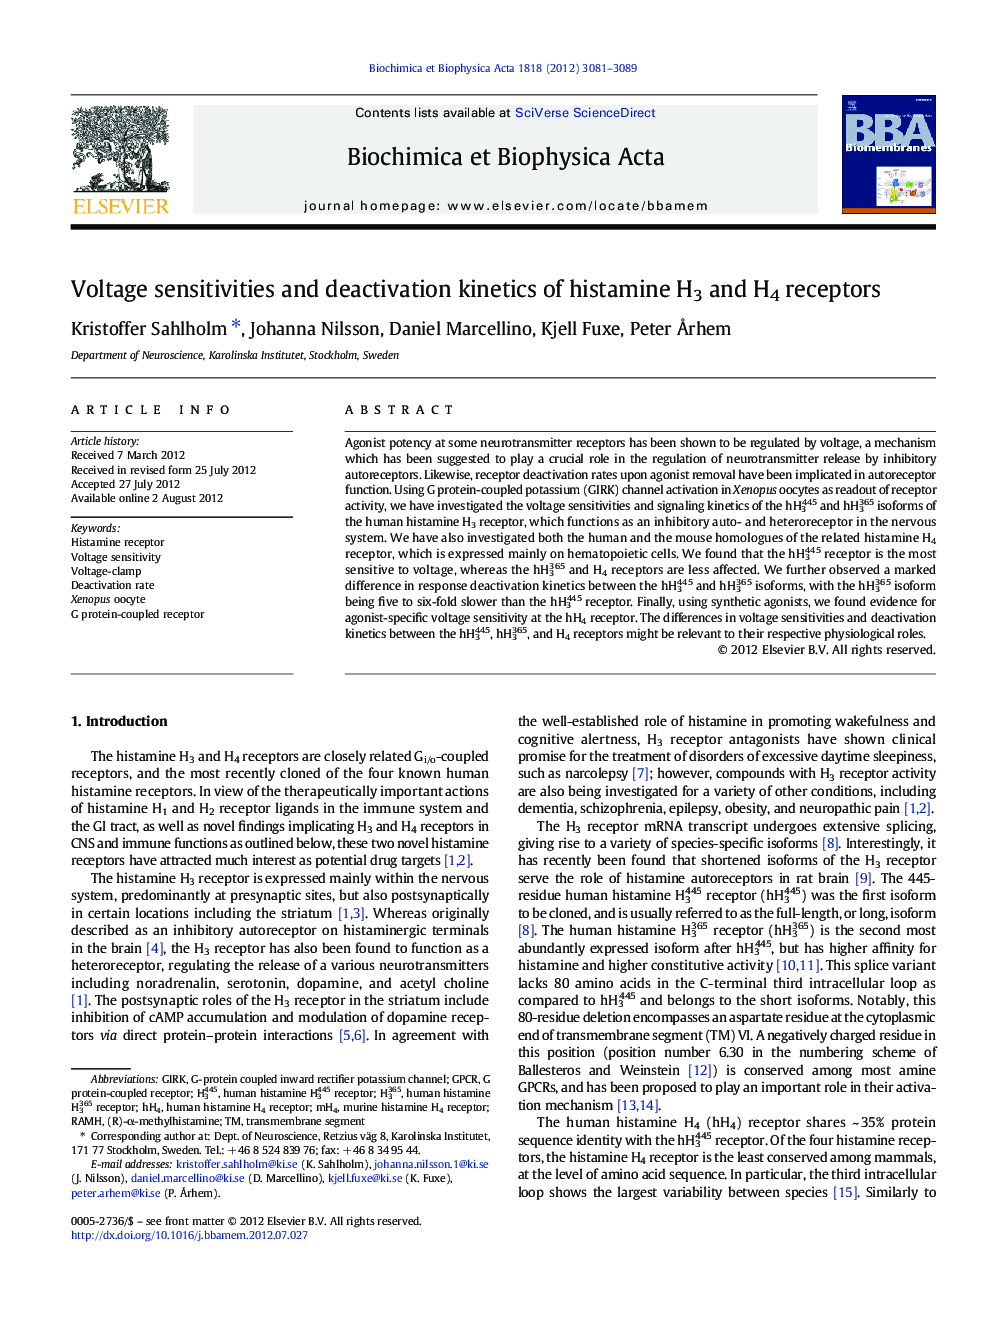 Voltage sensitivities and deactivation kinetics of histamine H3 and H4 receptors